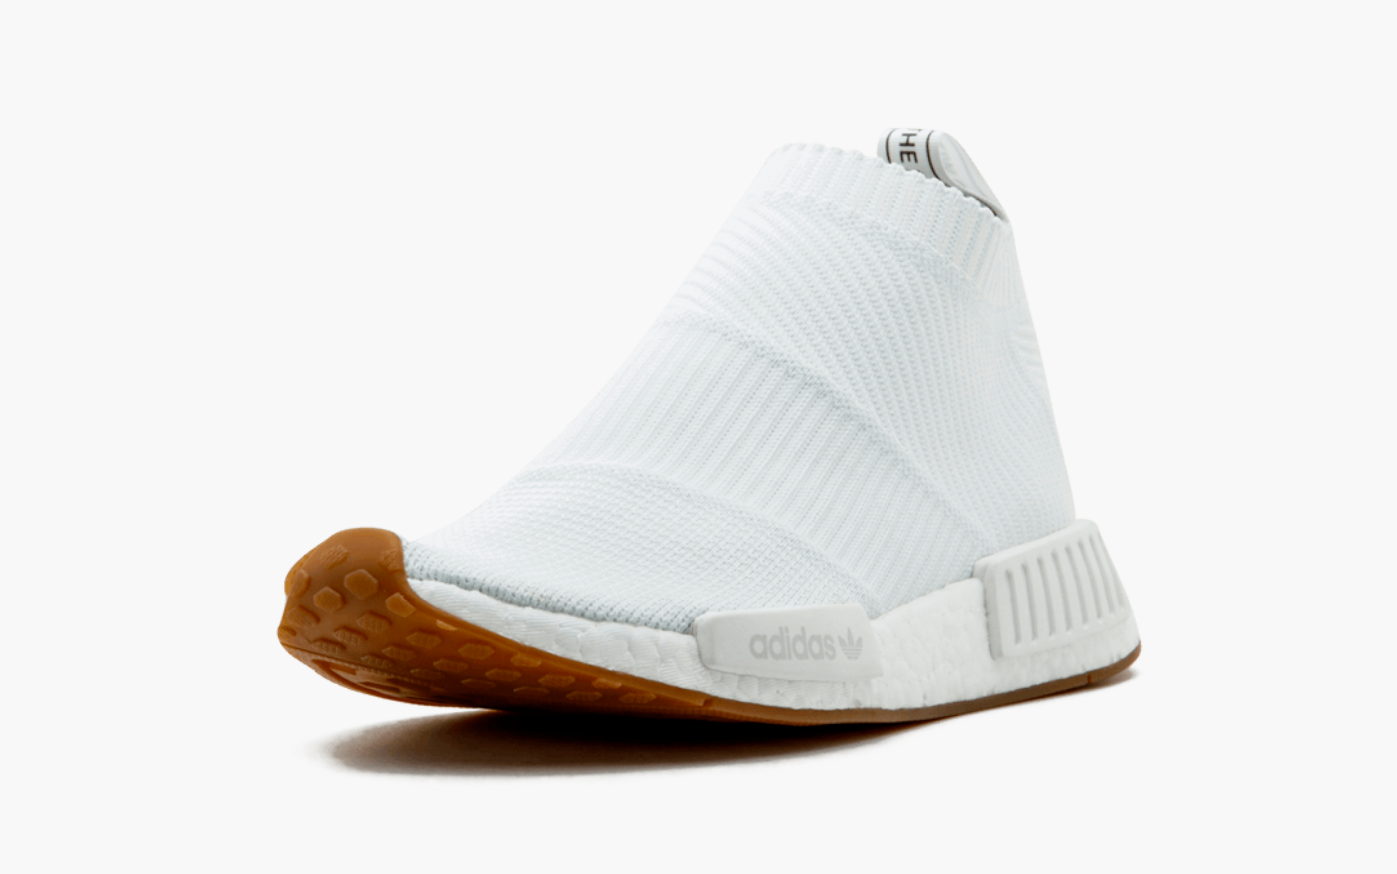 Adidas NMD City Sock 1 Primeknit White Gum Sole – Kicks